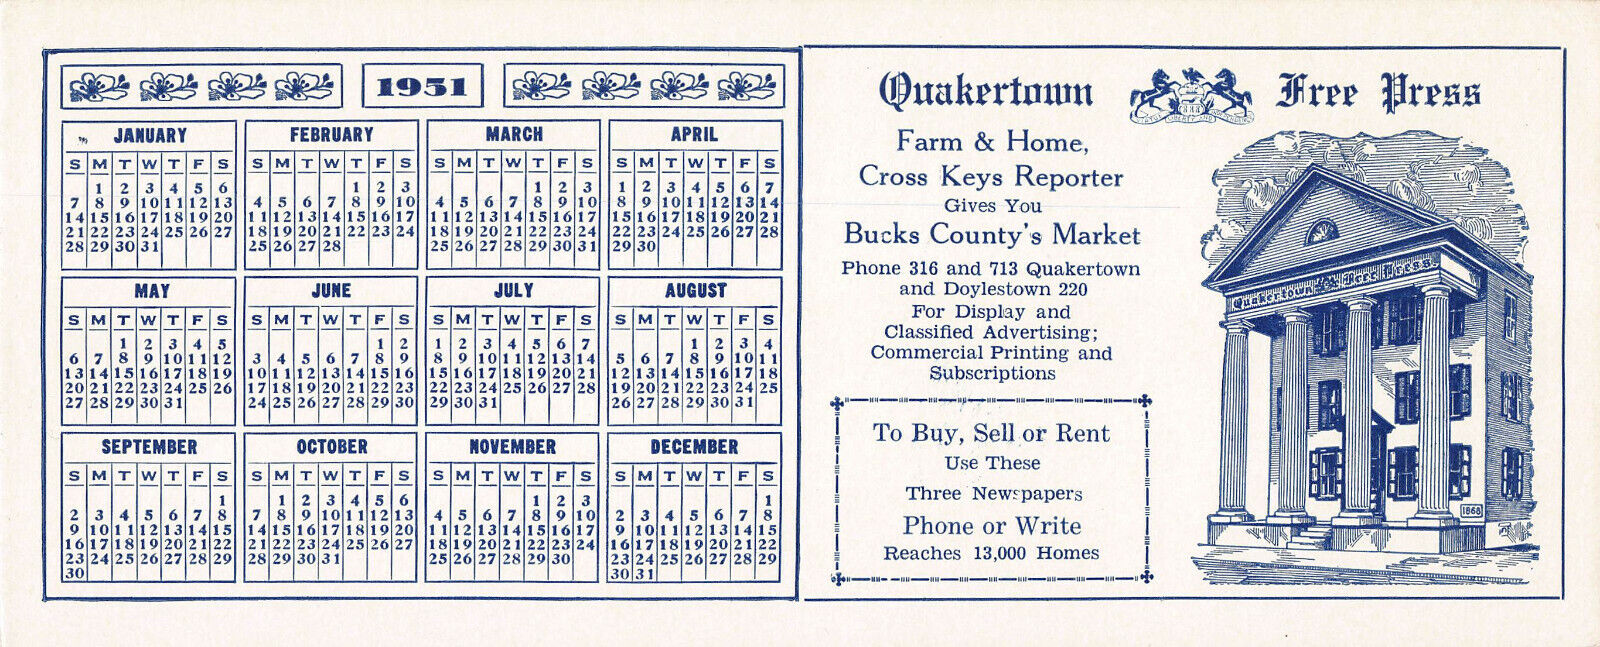 Quakerstown Free Press, PA., Newspaper, 1951 Advertising Ink Blotter, Unused